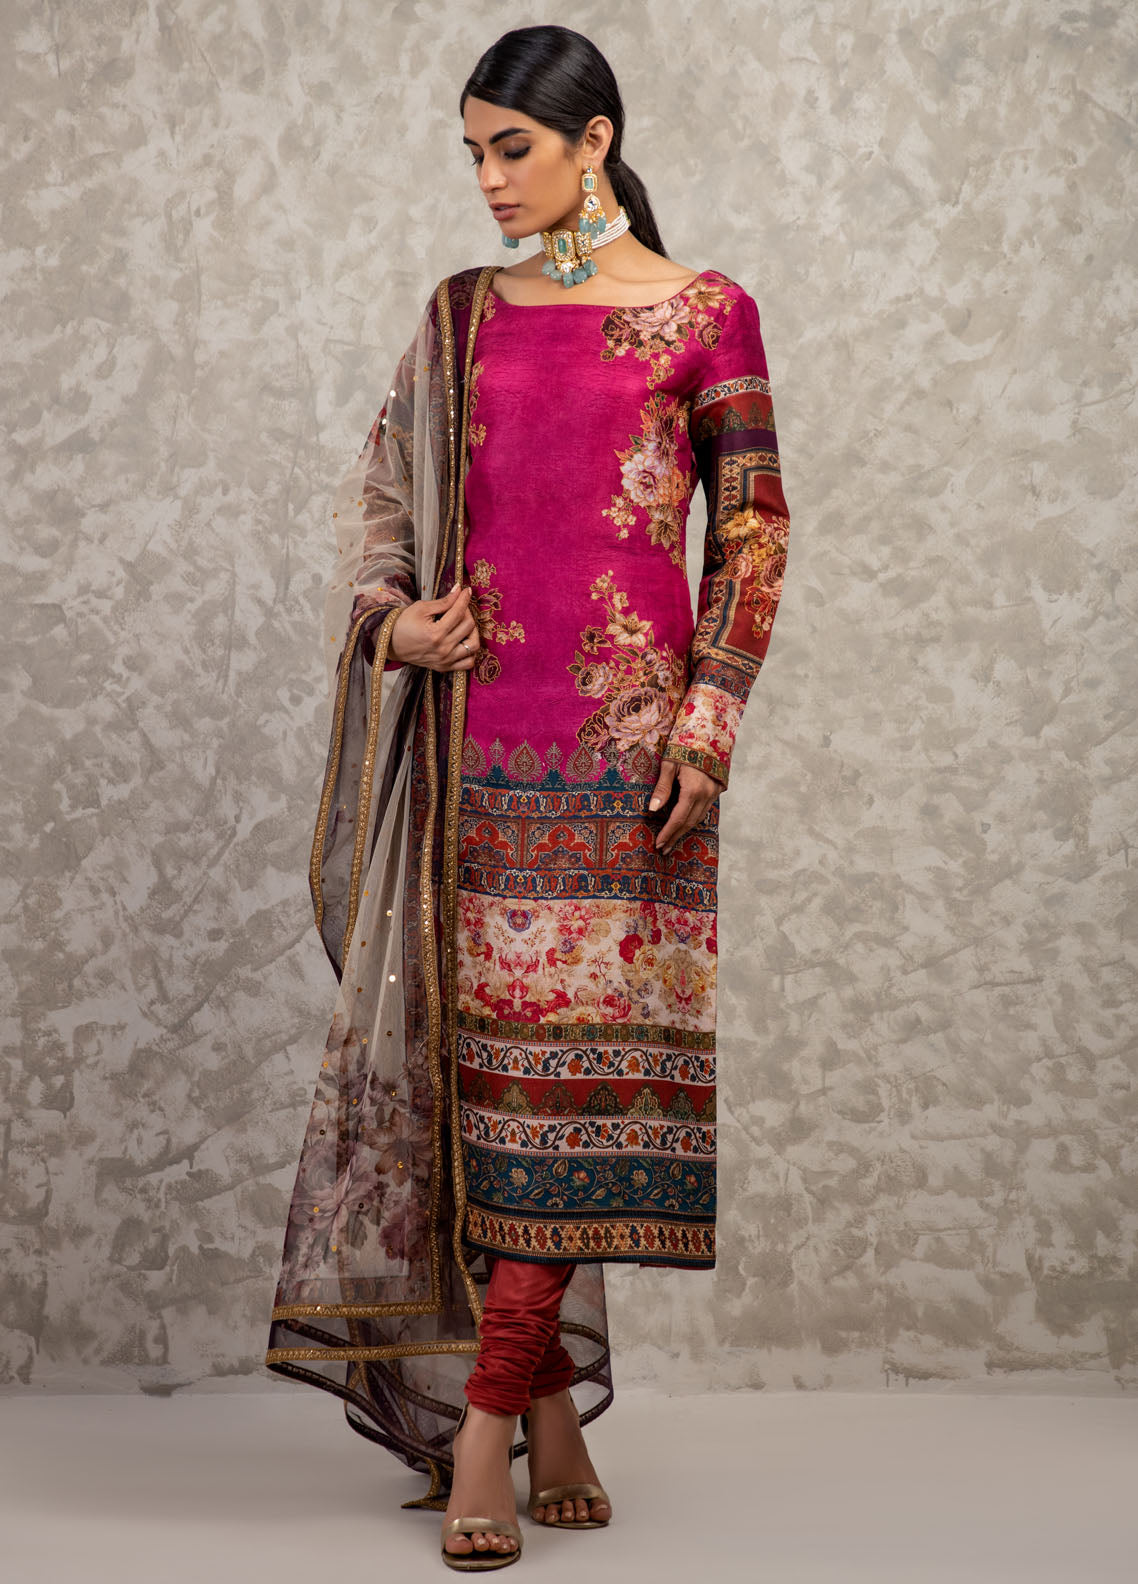 Shamaeel Ansari Luxury Pret Embroidered Silk Shirt AM-02